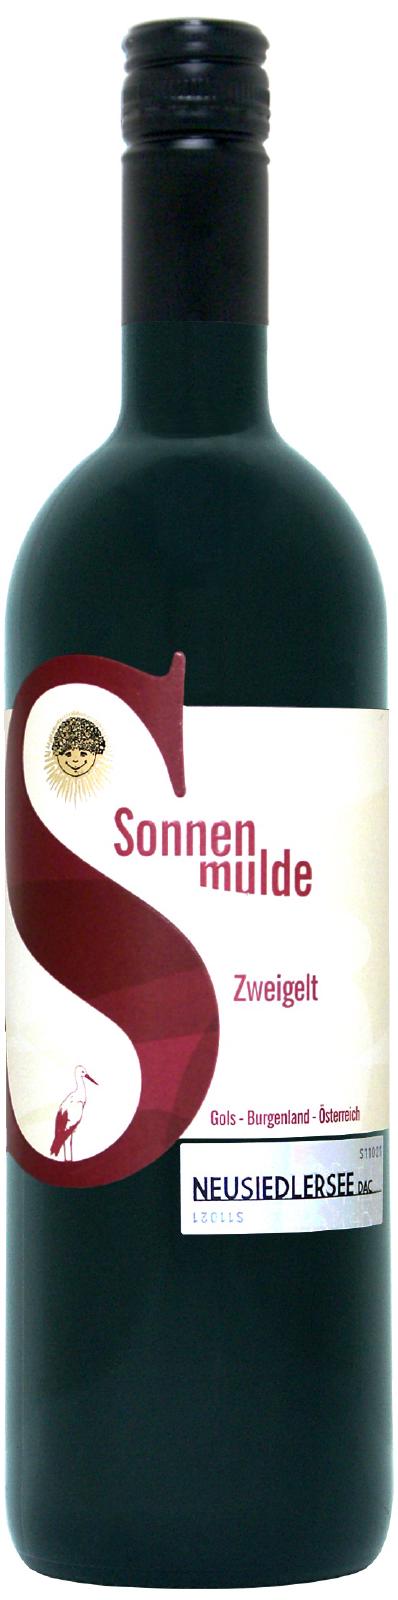 A bottle of Neusiedlersee DAC Zweigelt